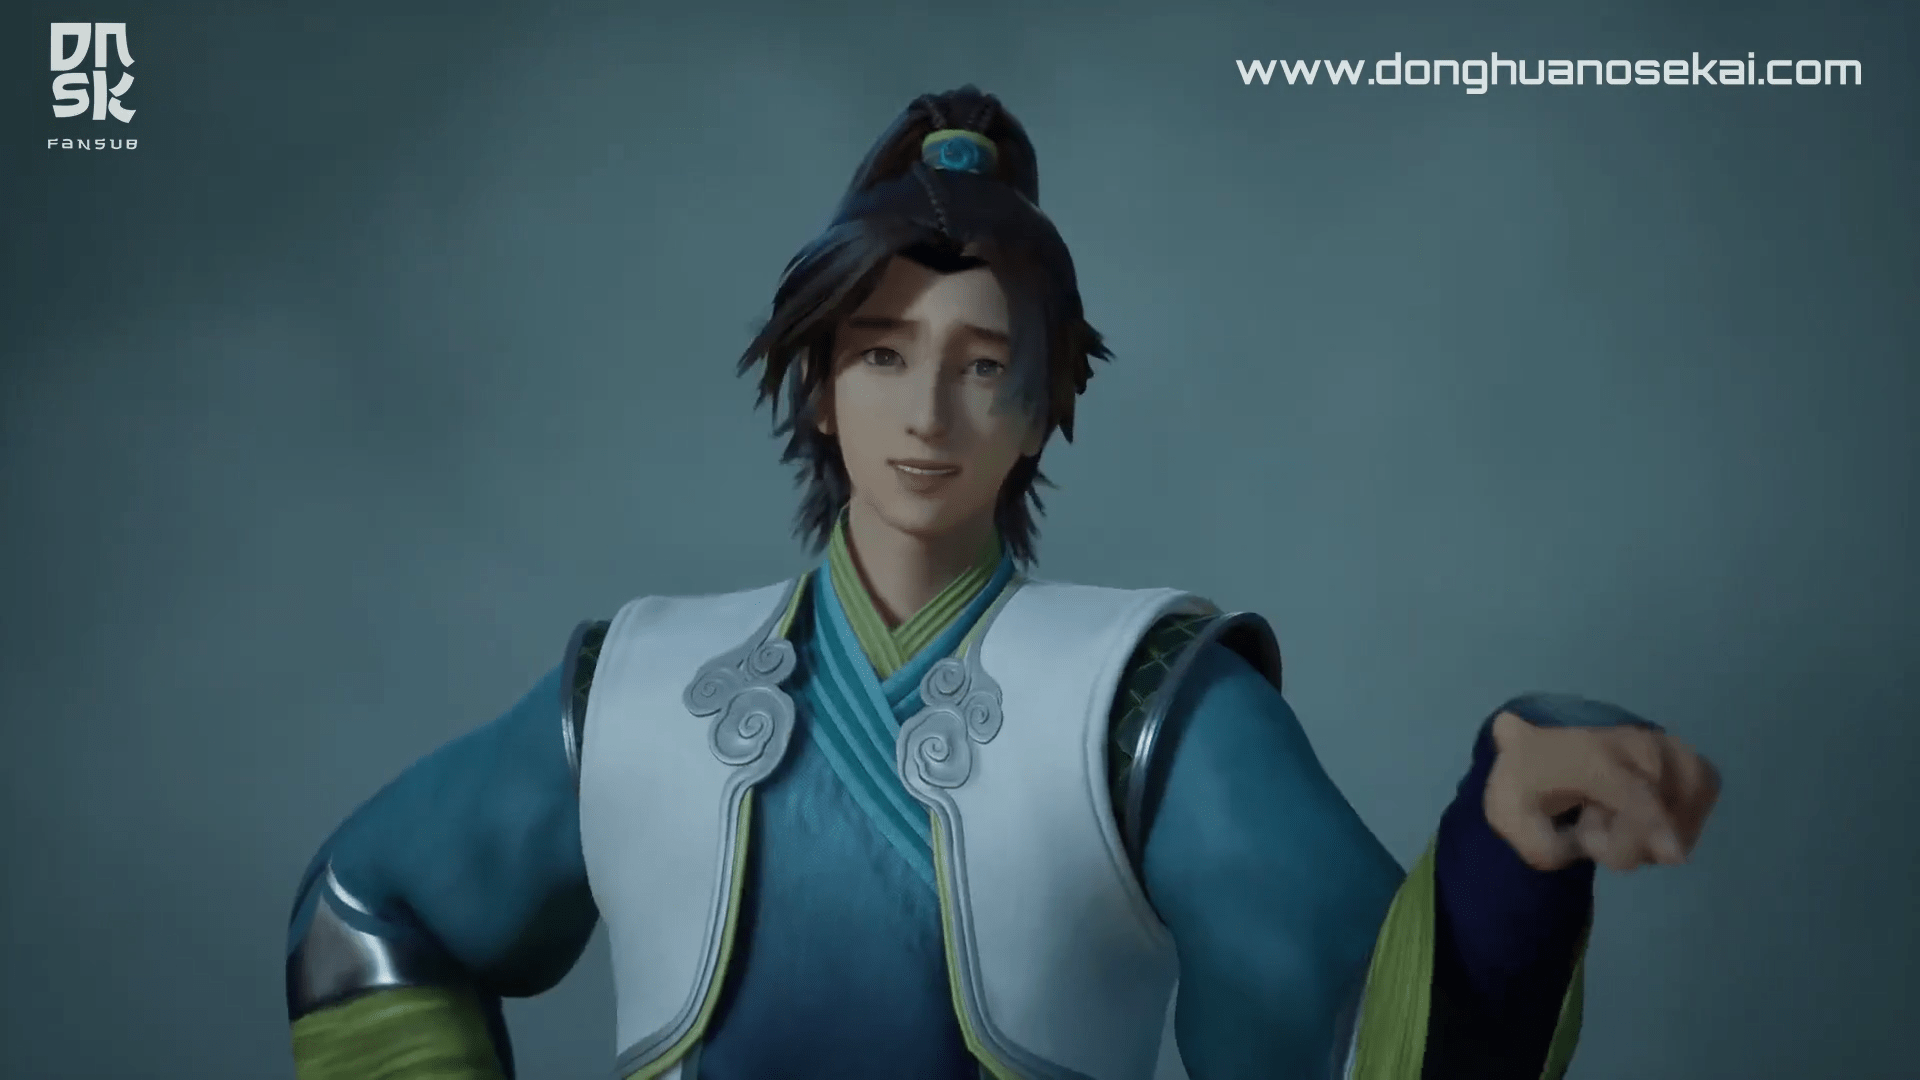 Assistir Wu Shang Shen Di – 1ª Temporada Online